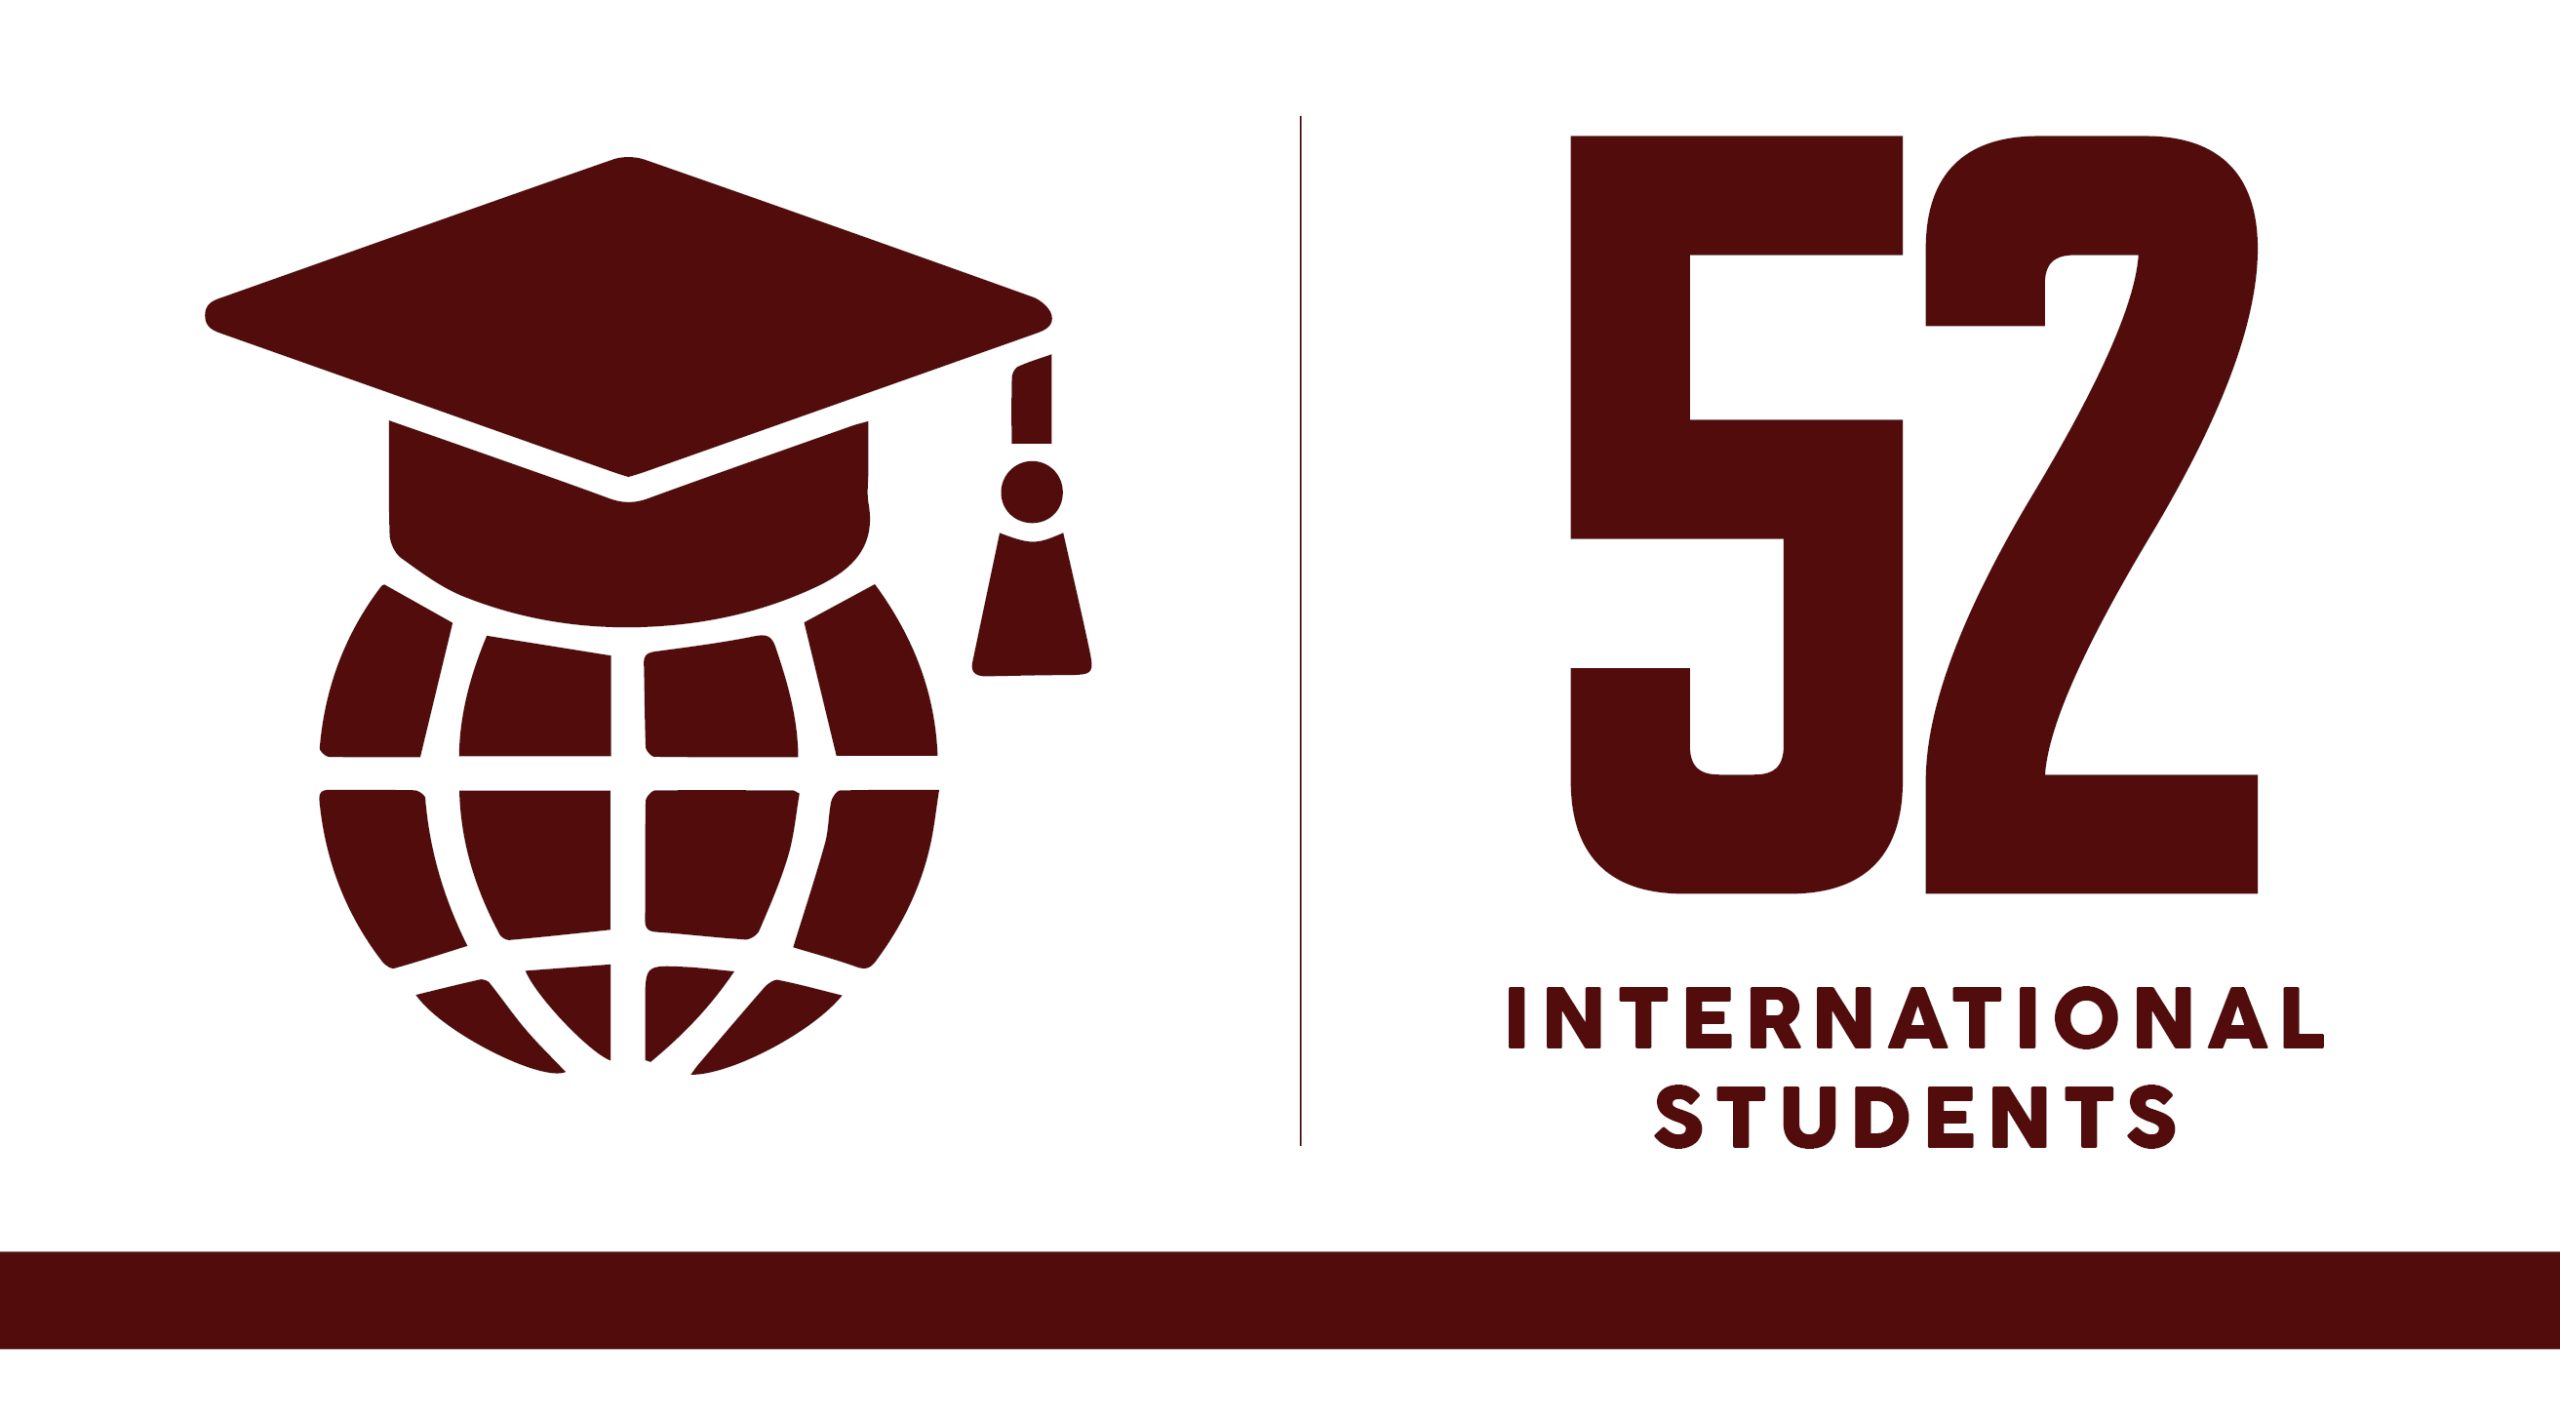 57 international students